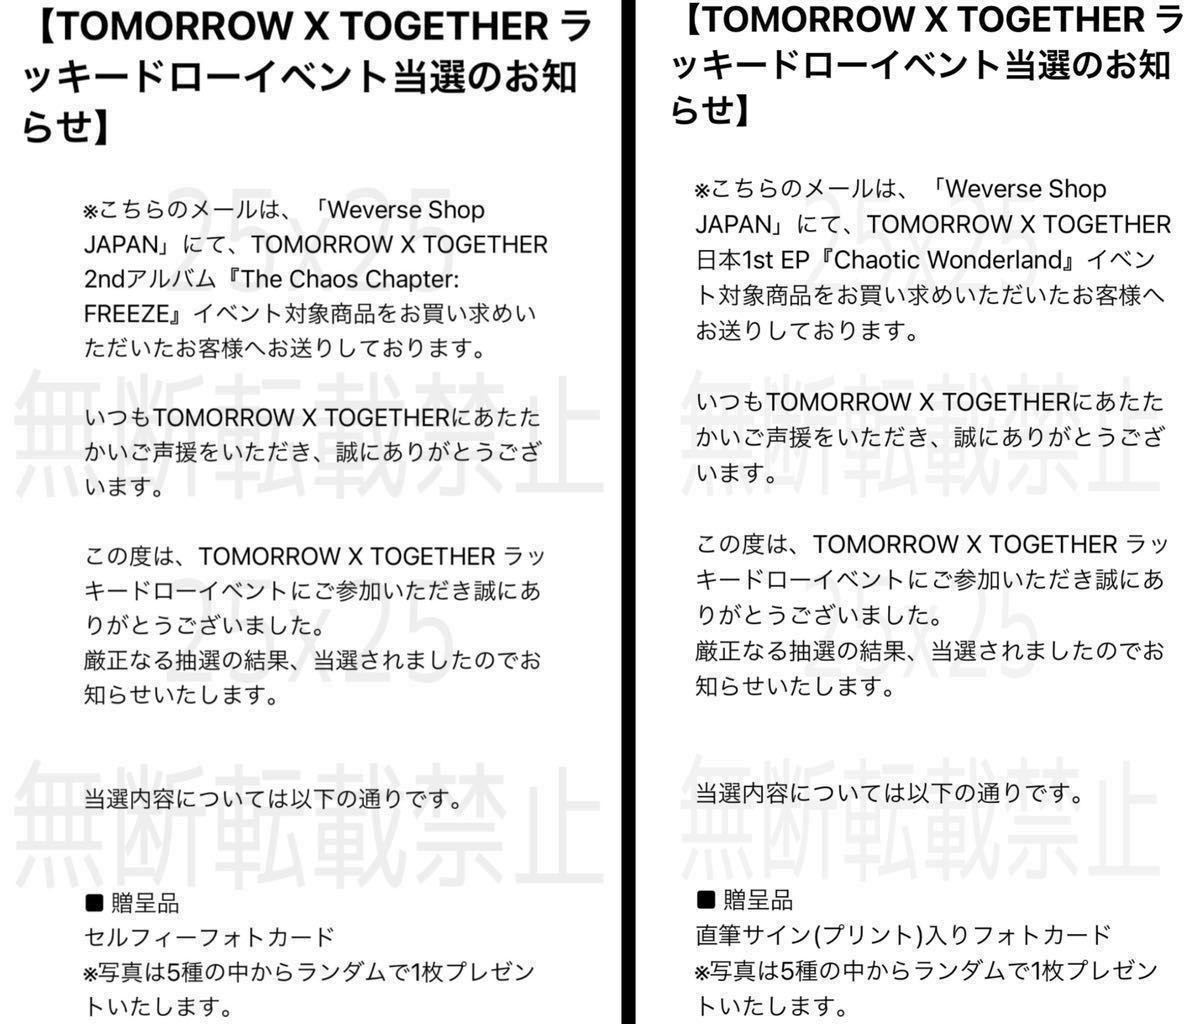 TXT TOMORROW X TOGETHER FREEZE + Chaotic Wonderland 公式 日本